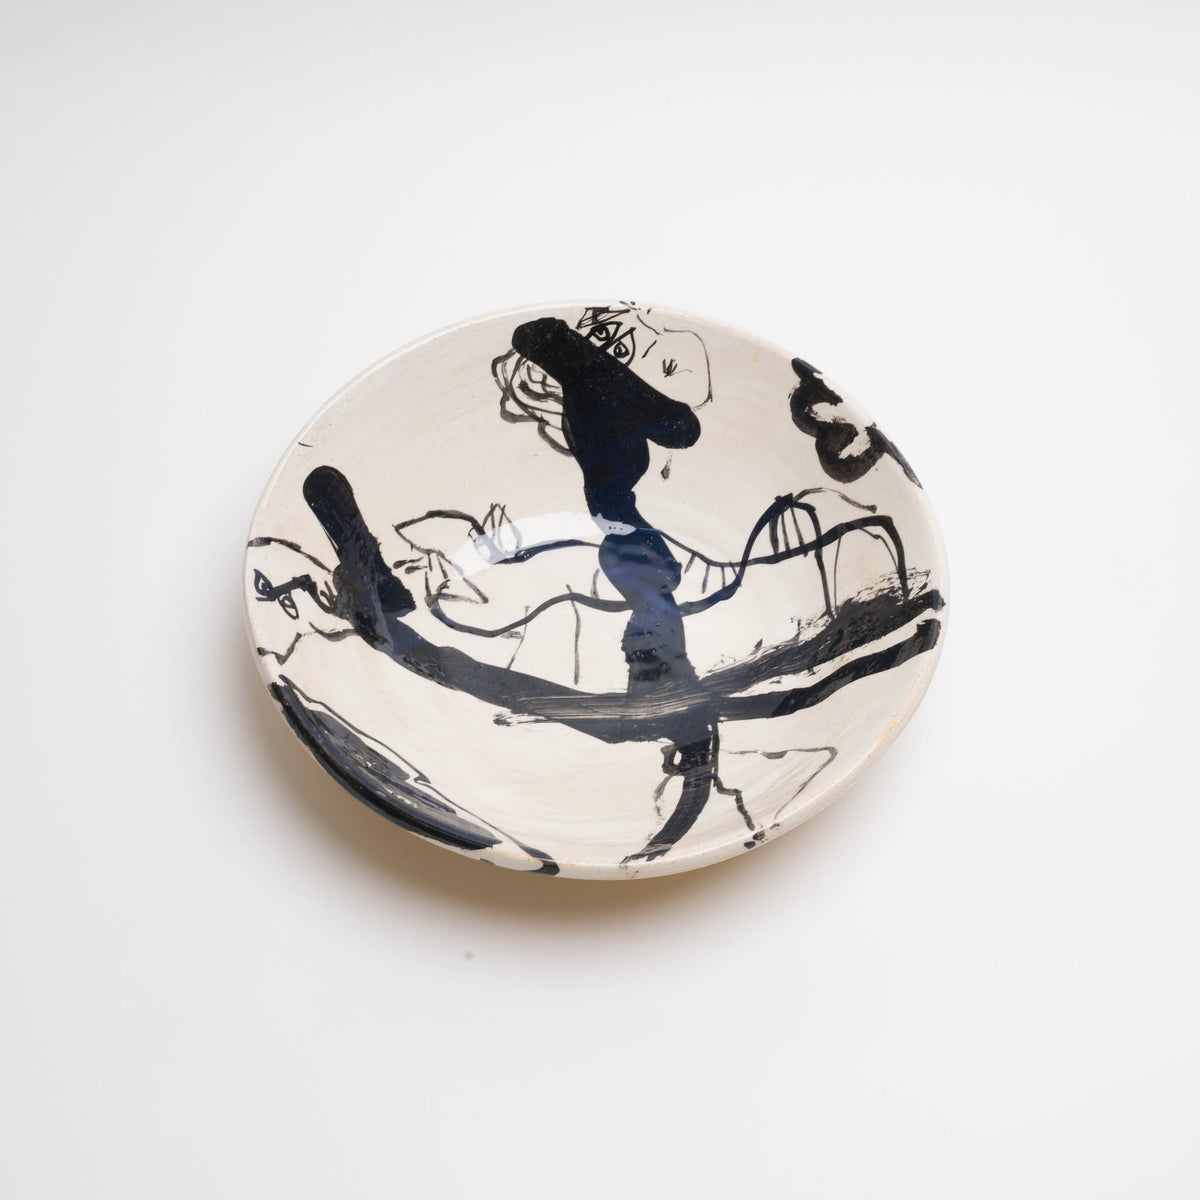 Oval bowl, hand painted, unique piece